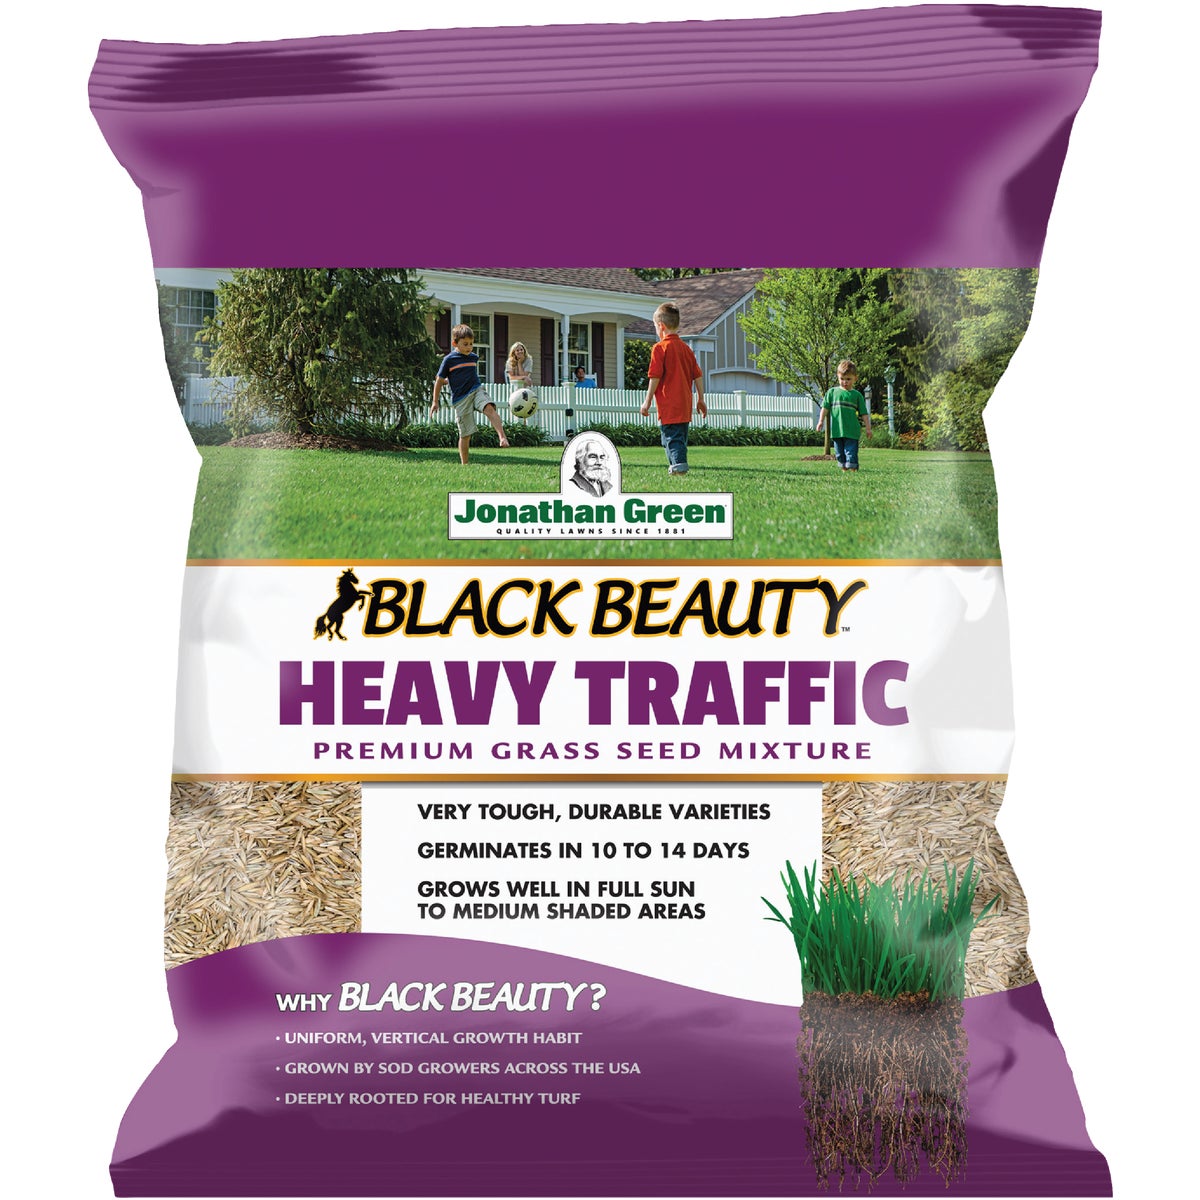 Item 704959, Heavy Traffic grass seed mixture.